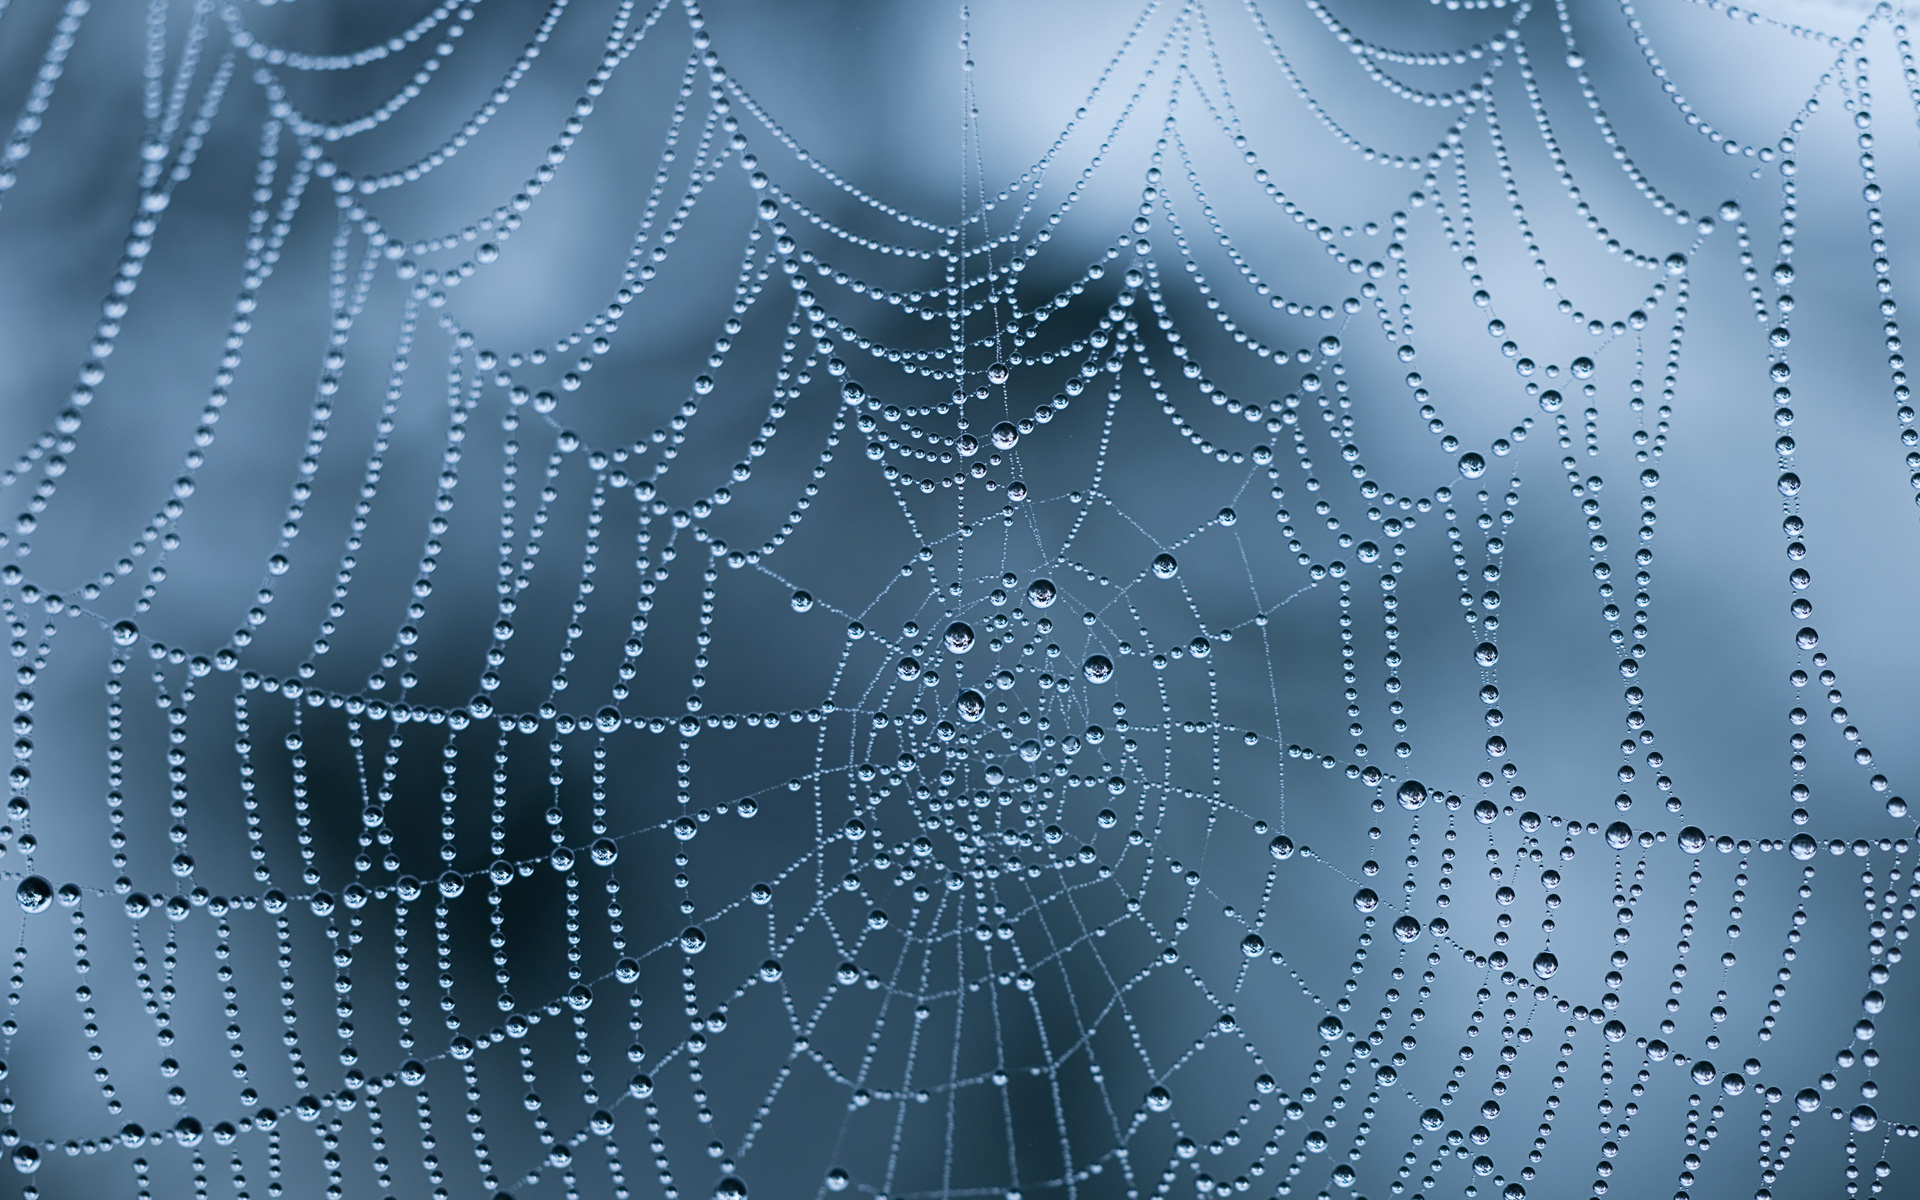 web wallpaper hd,spider web,moisture,water,blue,drop